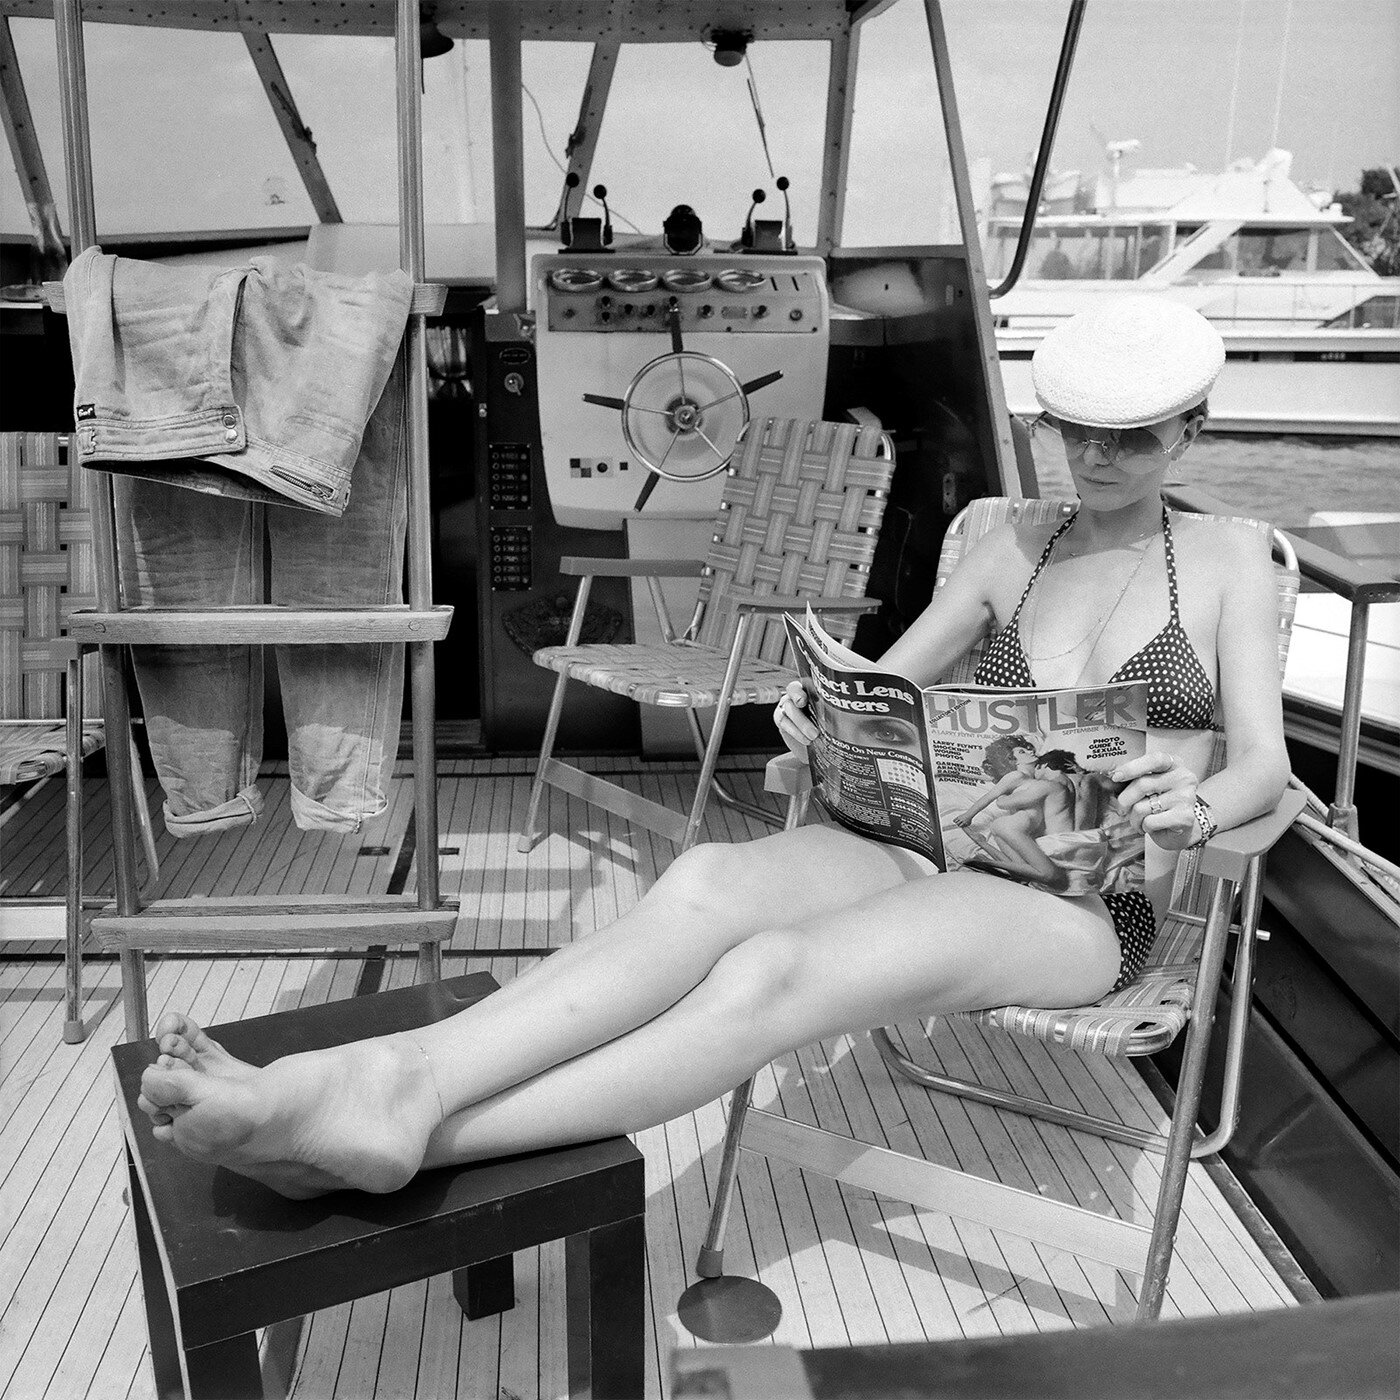 Hustler on a boat, Fire Island Pines, NY, 1978.